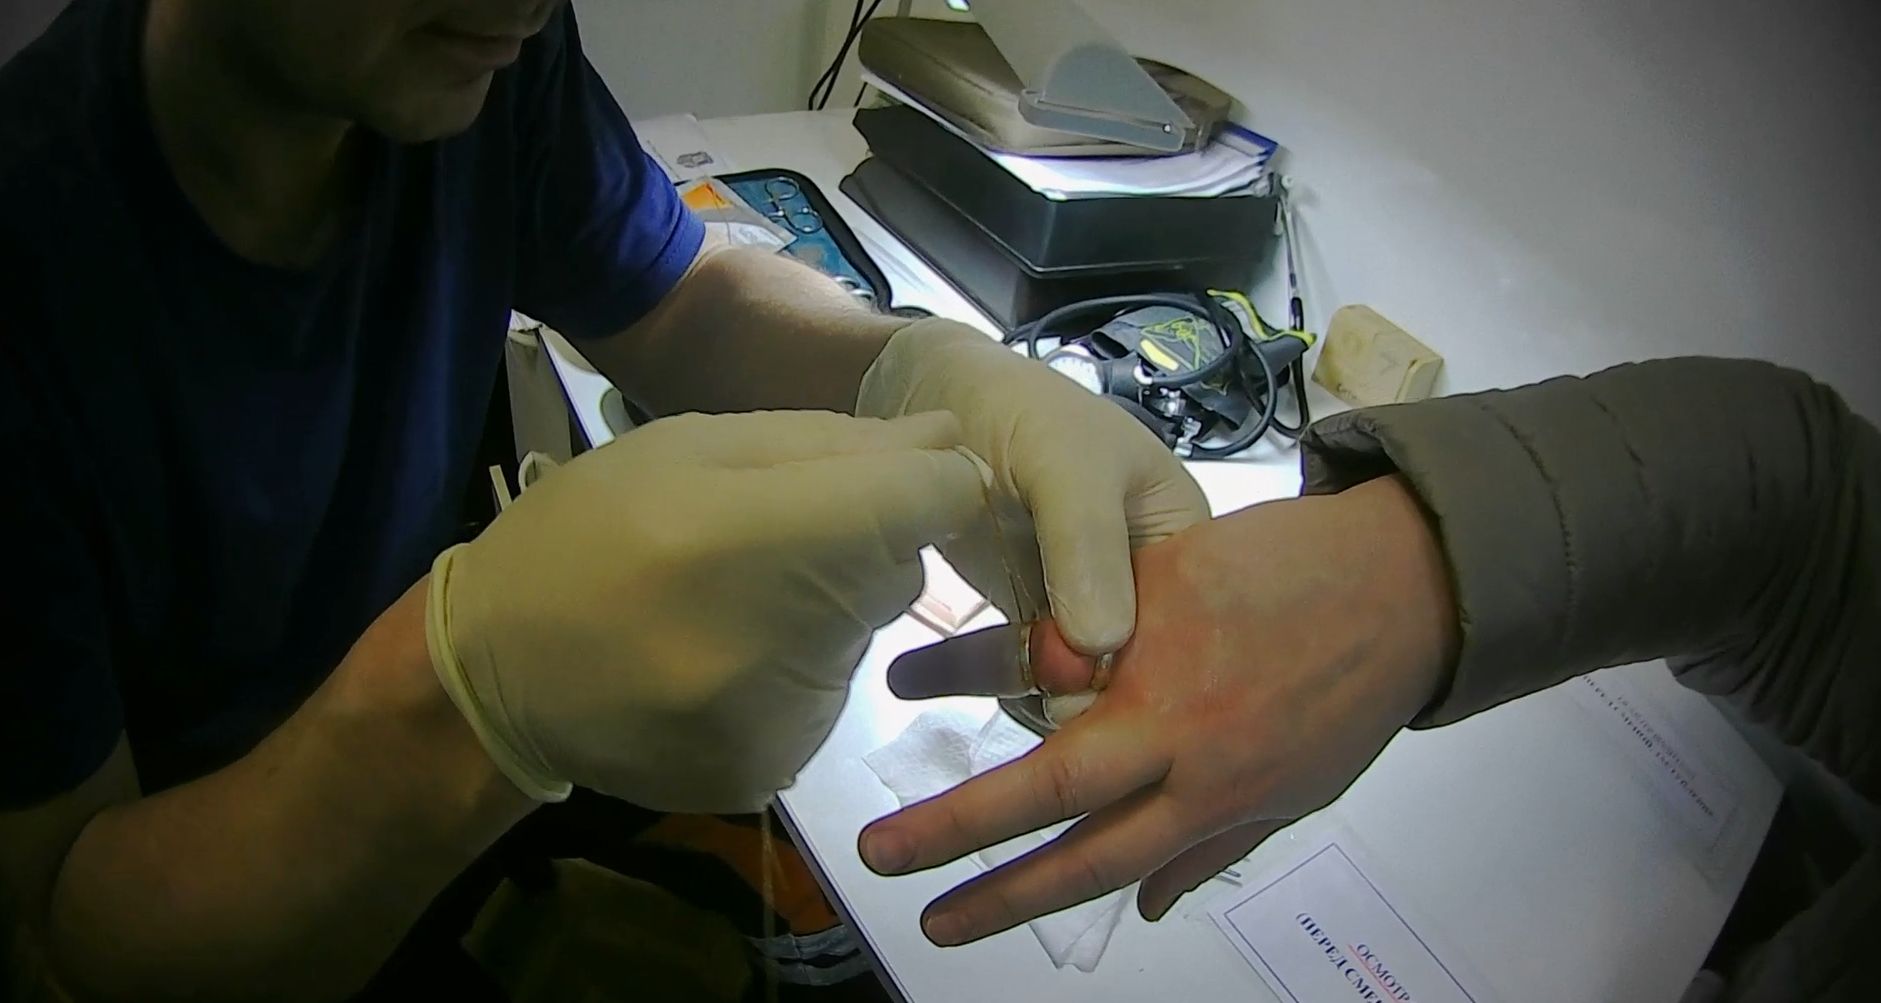 Сотрудники ЦГЗ спасли ярославну от колец, сжавших палец докрасна